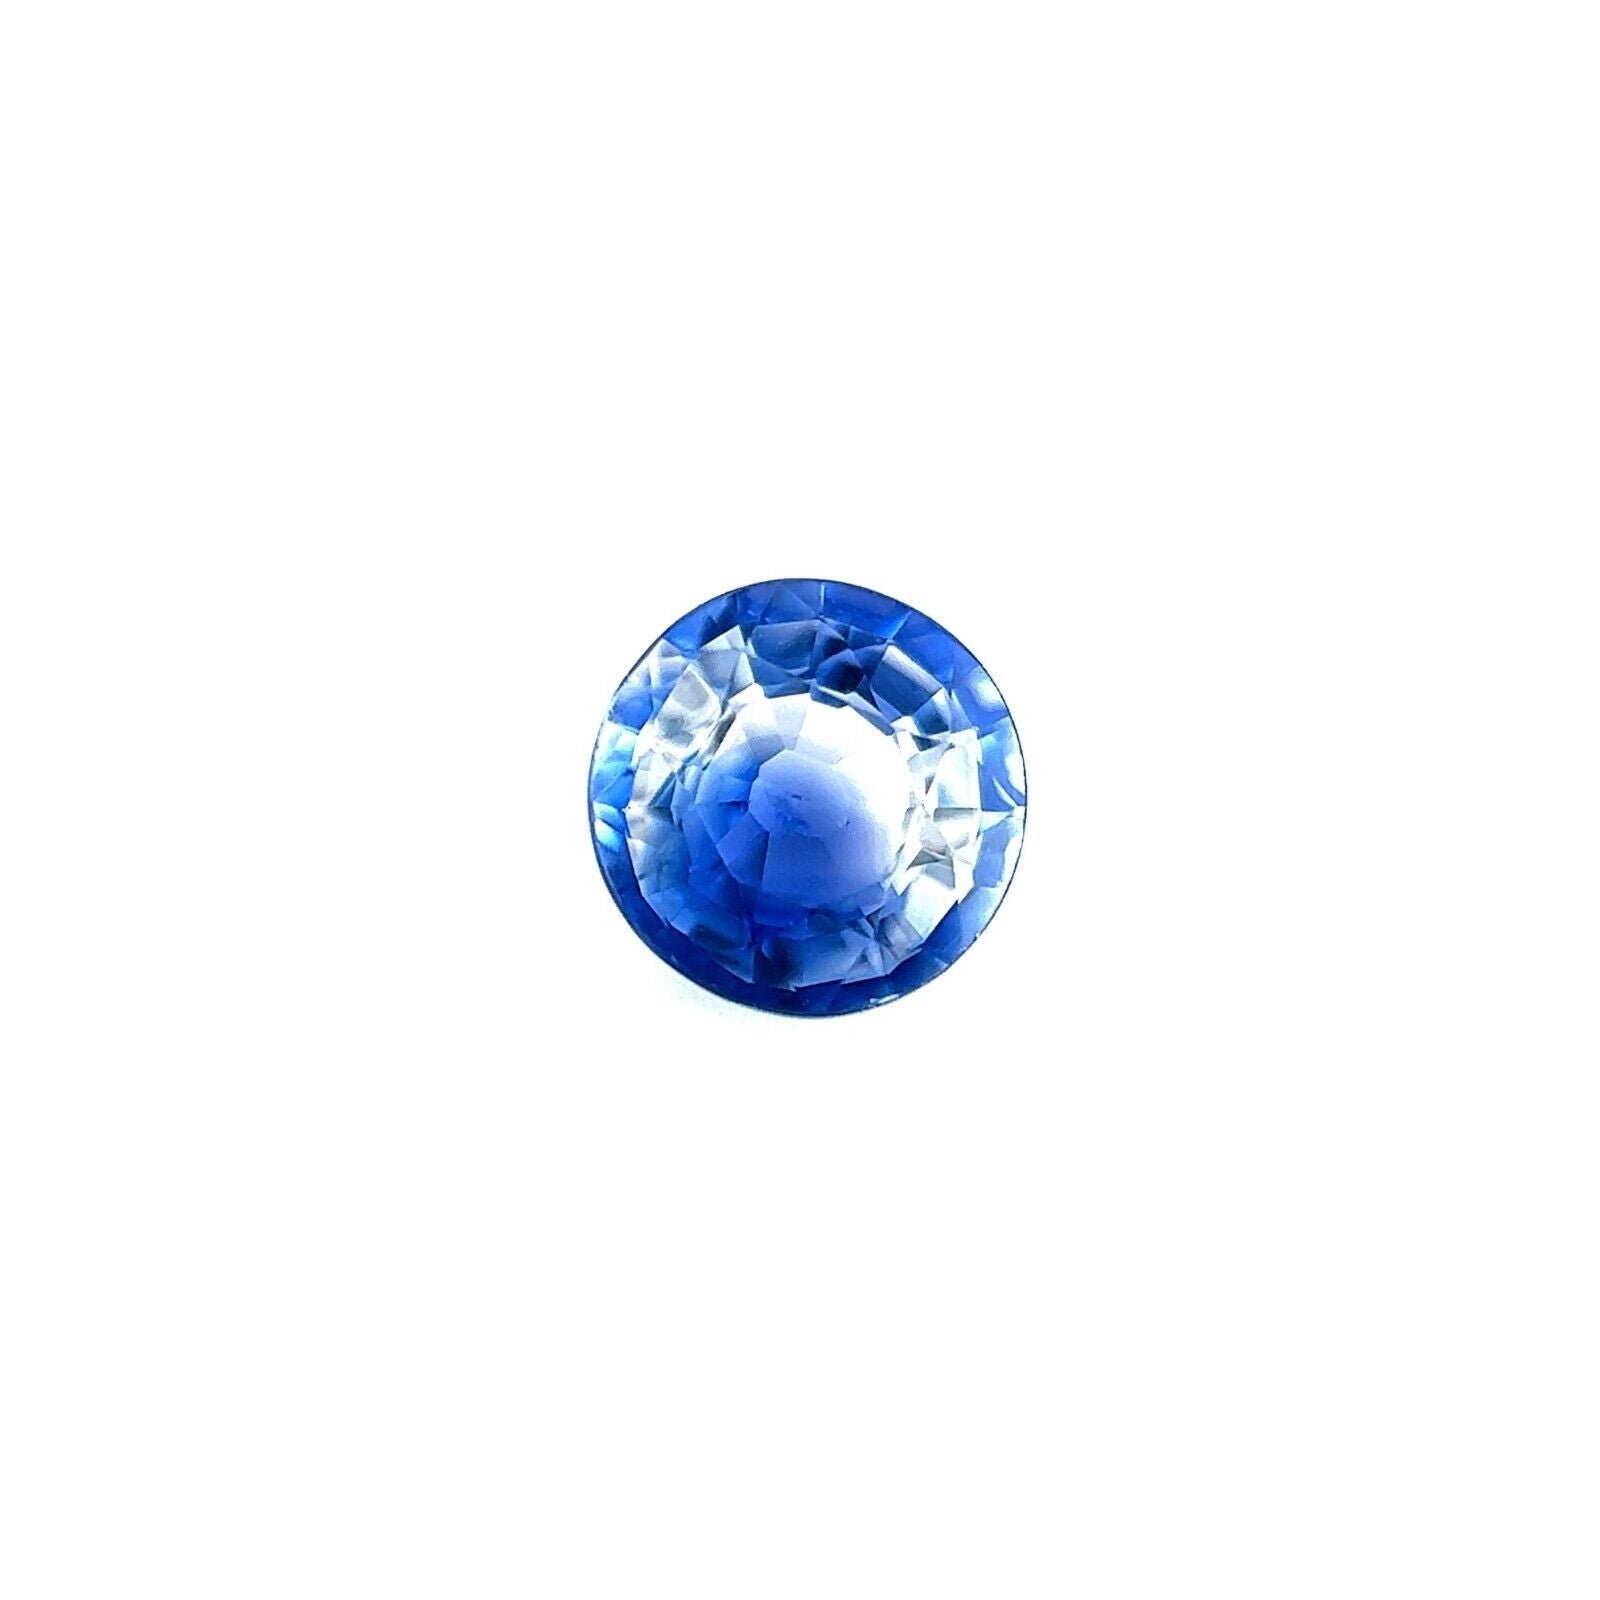 Bi Color Ceylon Sapphire 0.68ct Blue White Natural Round Cut Rare Gem VS For Sale